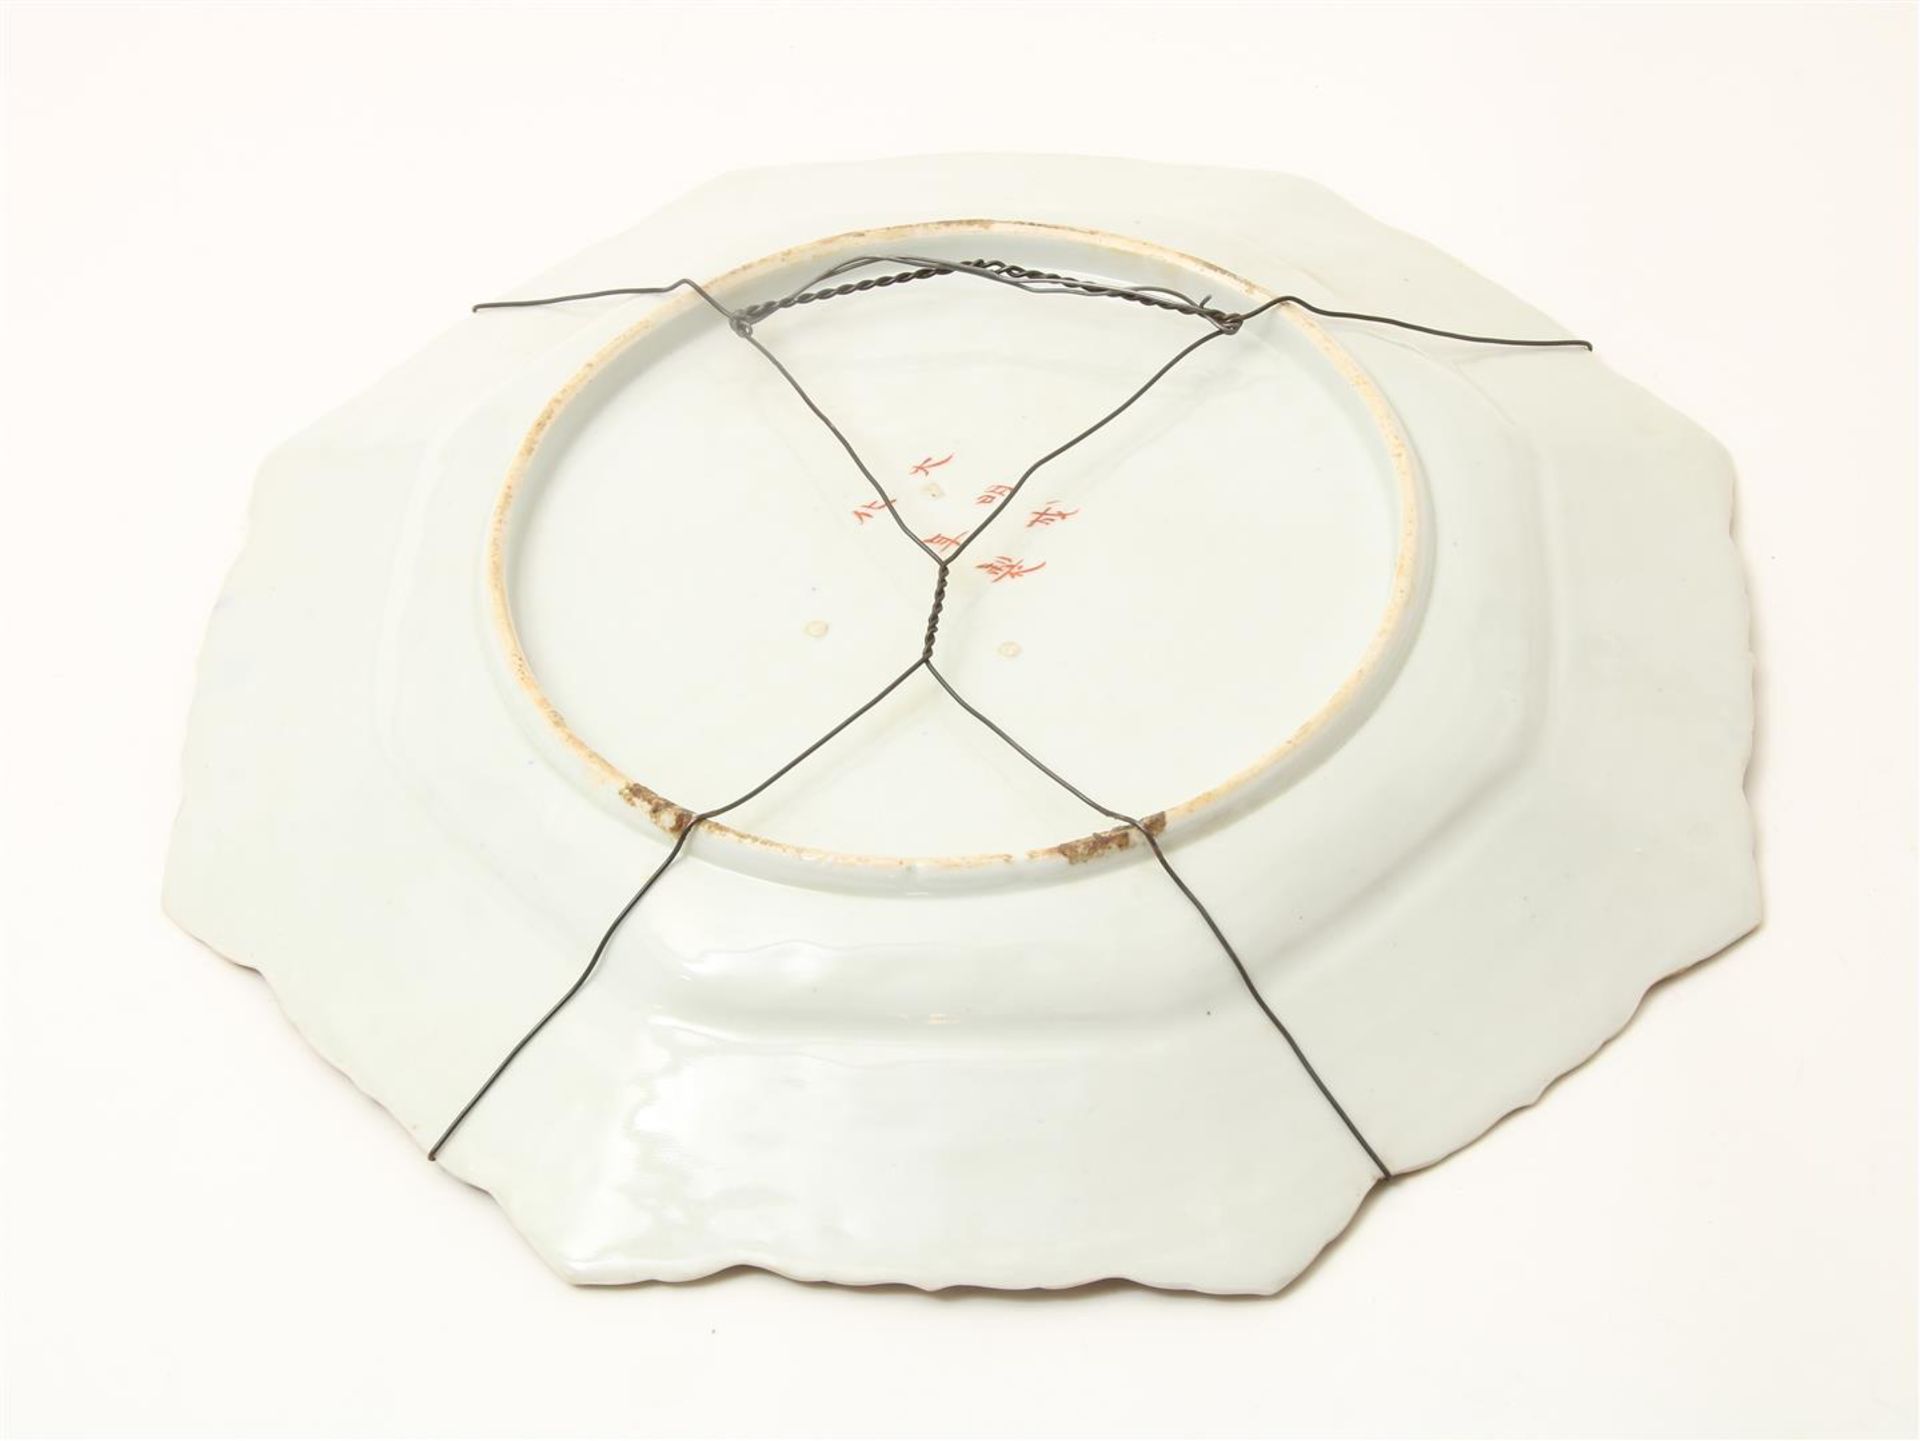 Octagonal porcelain dish, Japan, 19th century - Bild 3 aus 4